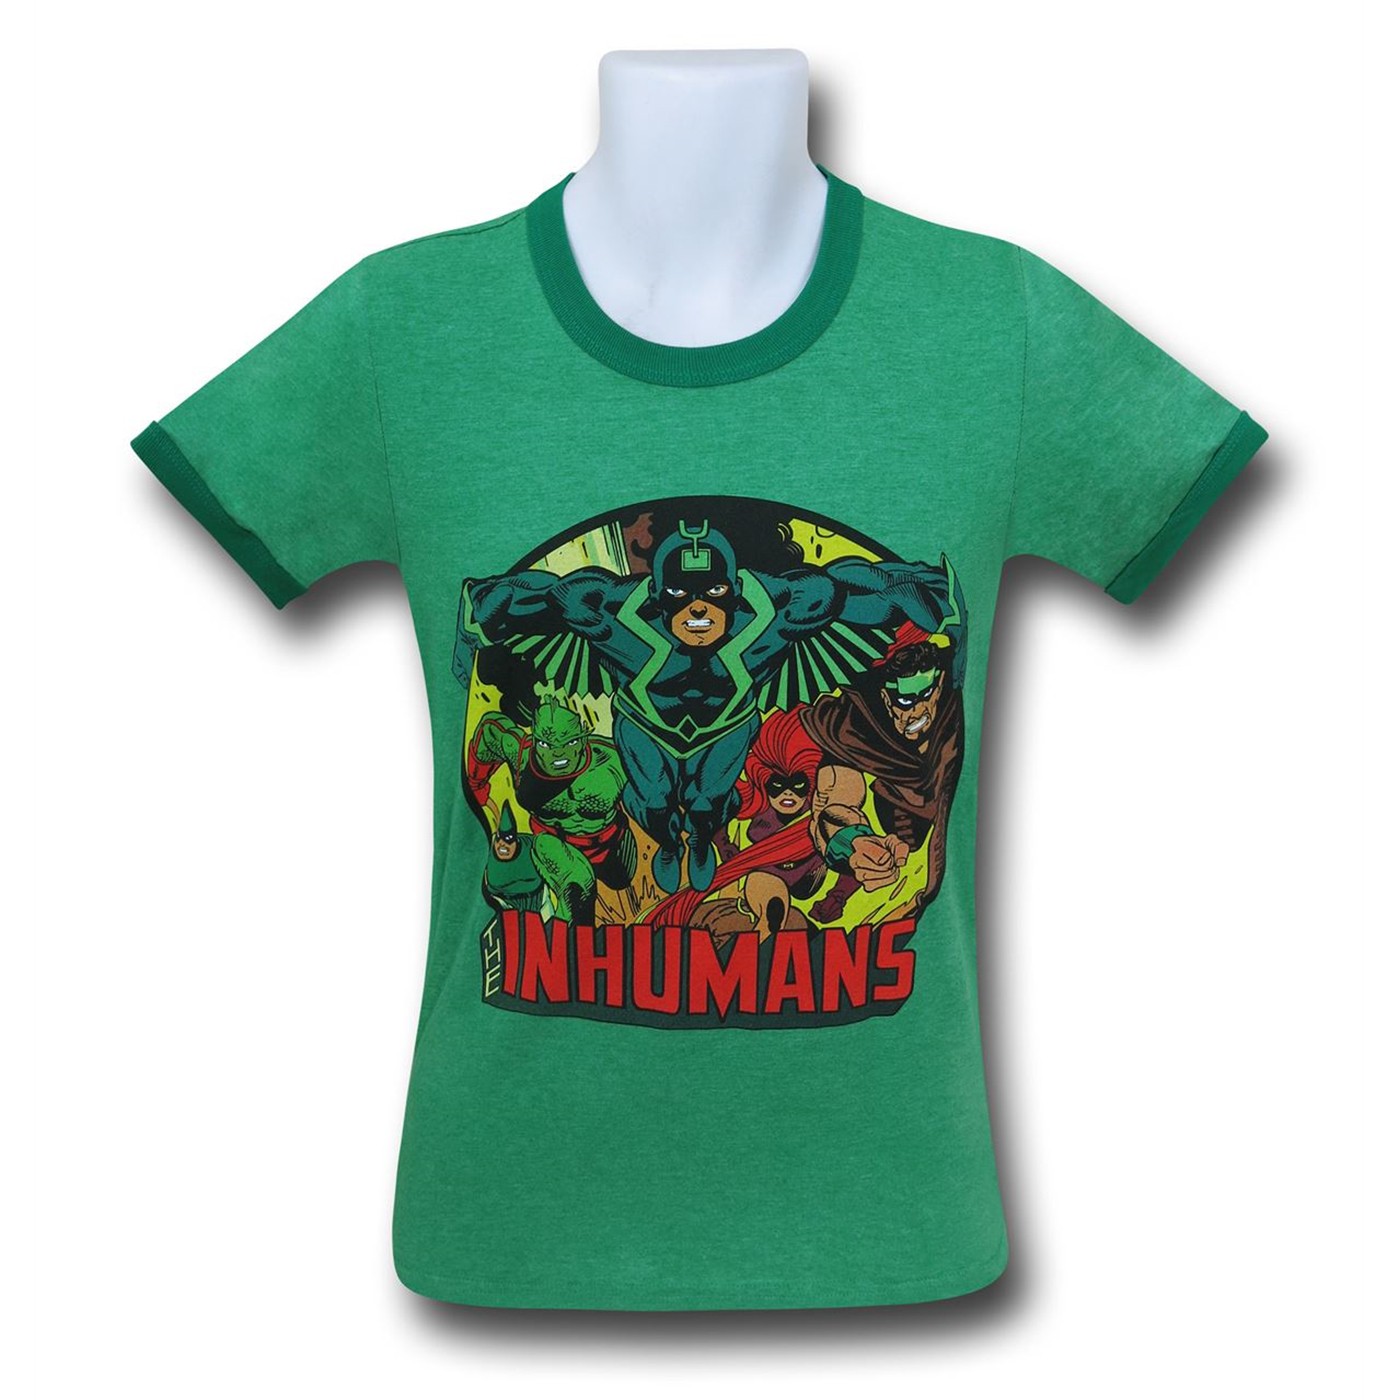 Inhumans on Green T-Shirt